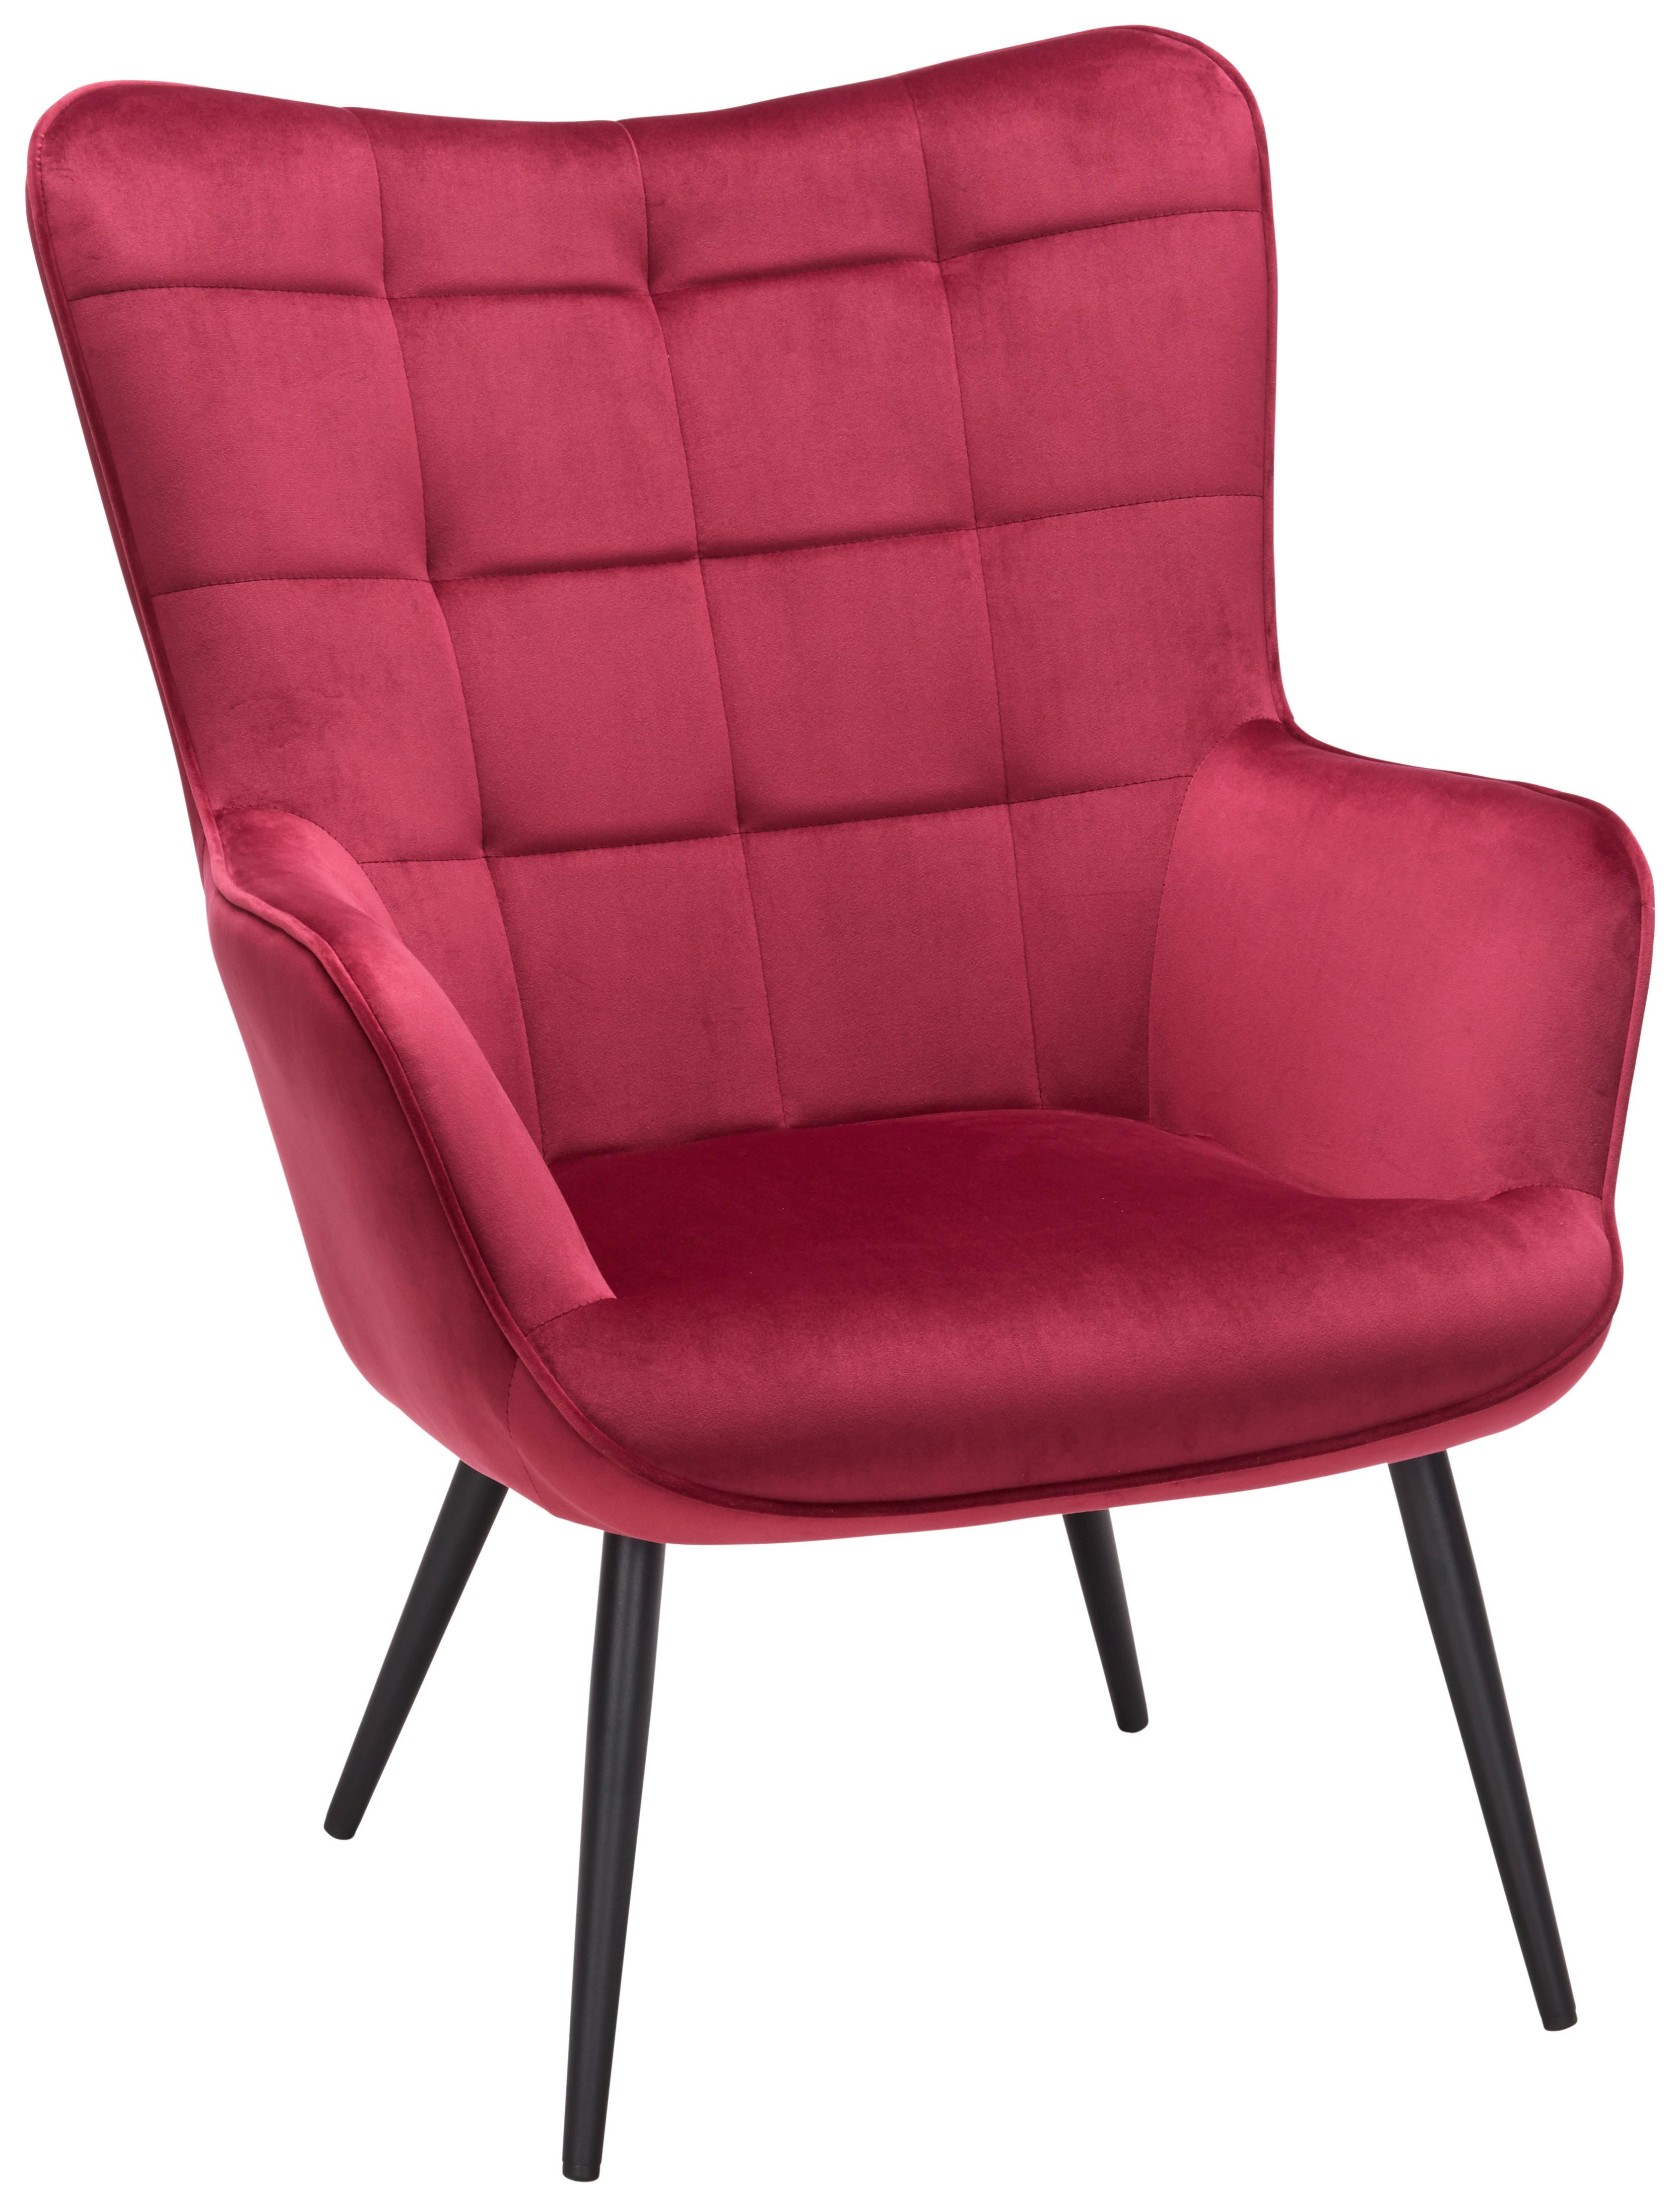 Relaxsessel aus Samt in Rot - Rot/Schwarz, Modern, Textil/Metall (72/98/80cm) - Modern Living